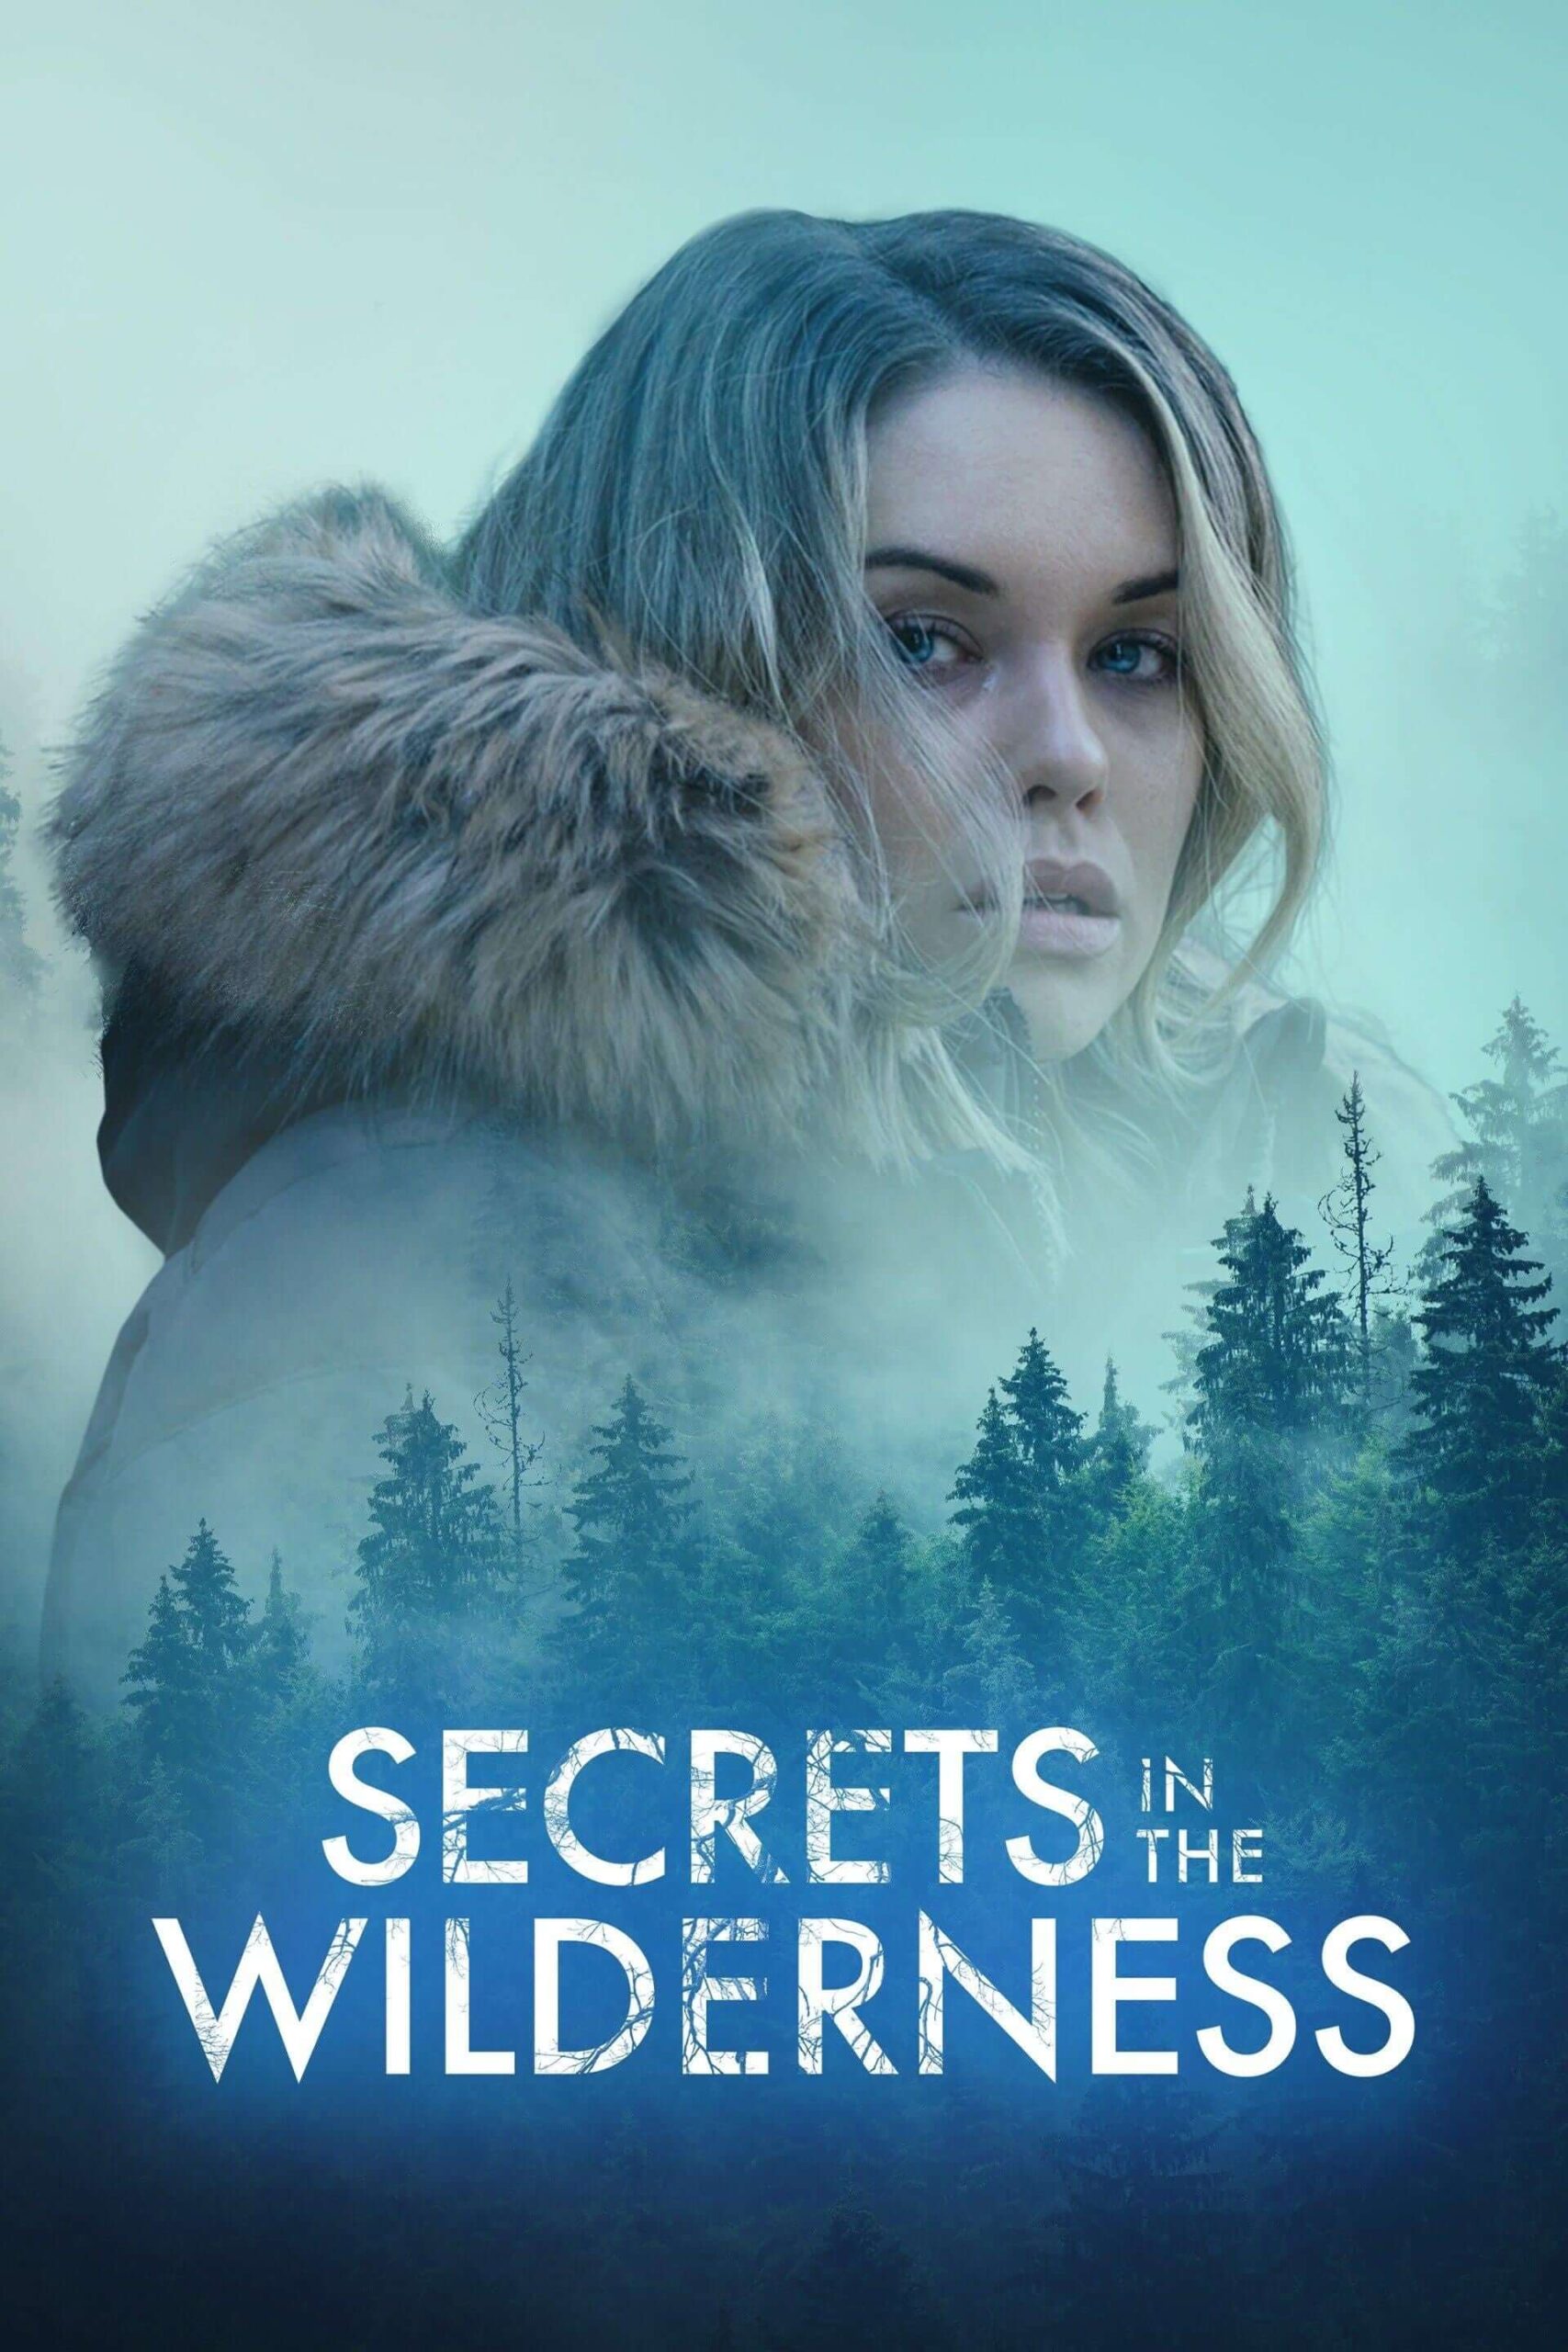 اسرار درون طبیعت وحش (Secrets in the Wilderness)